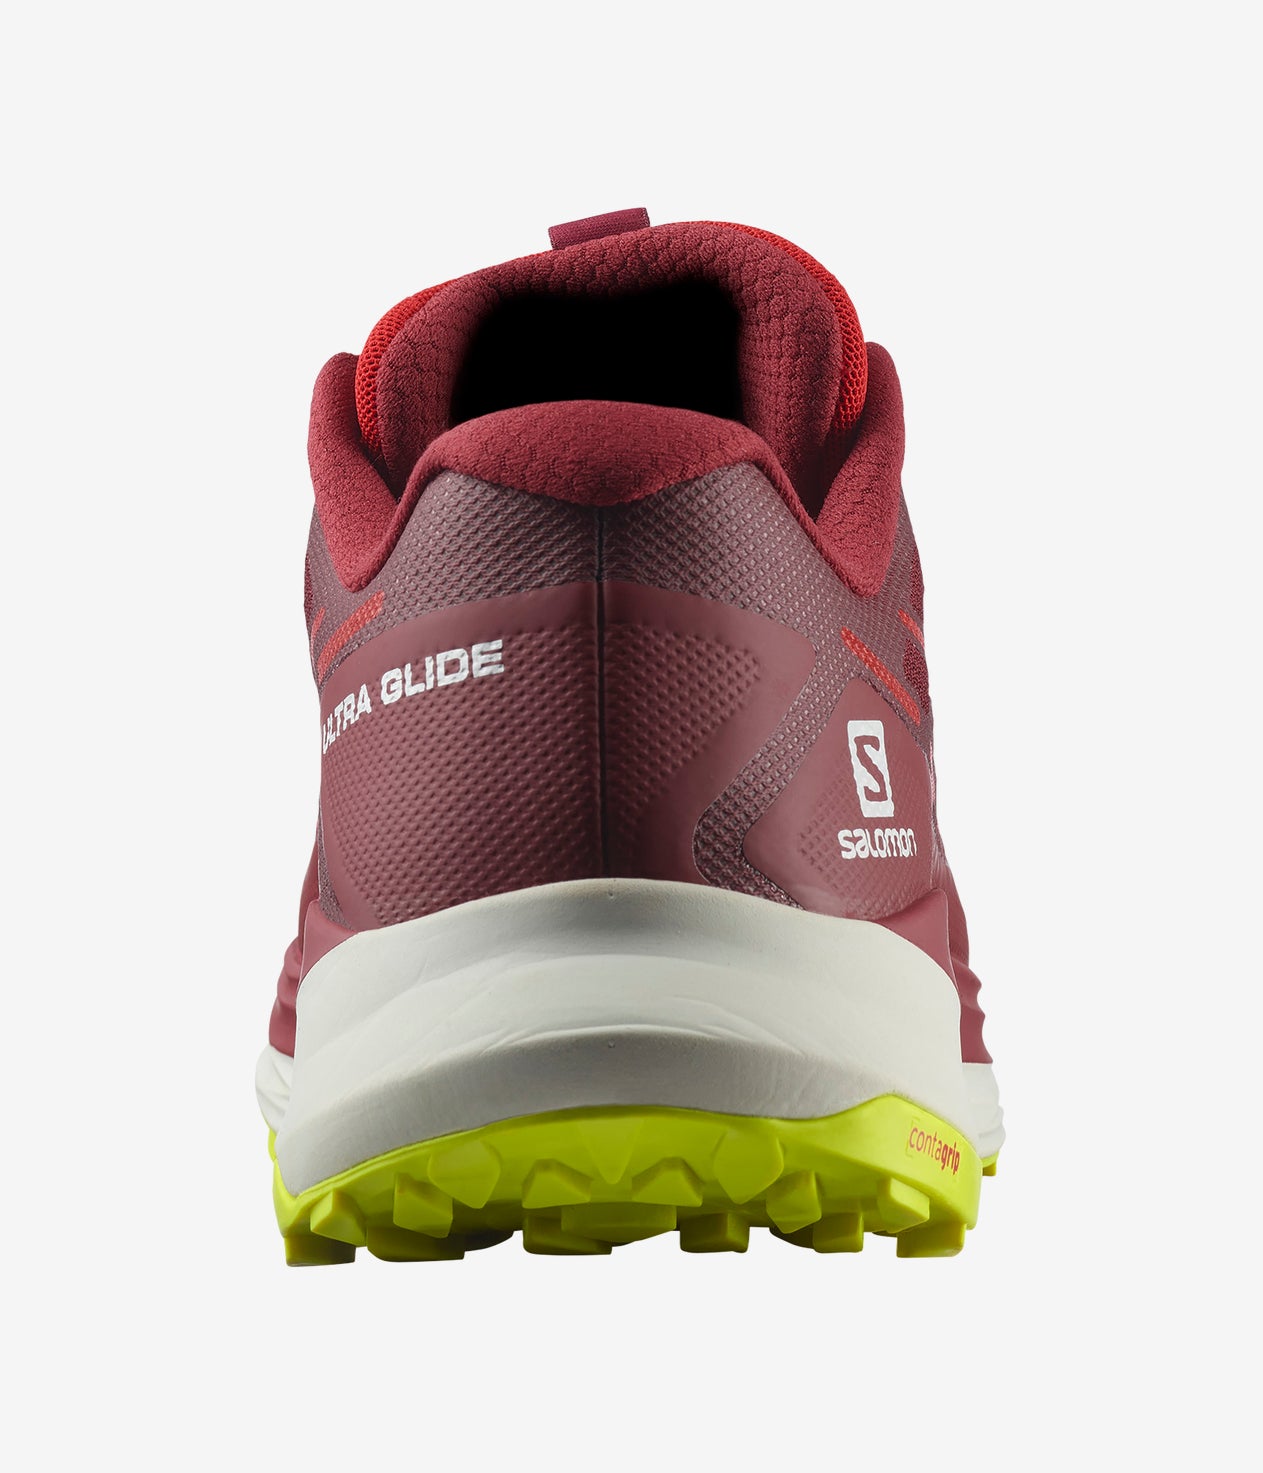 Salomon Men's Outdoor & Sports Running Shoes, Red